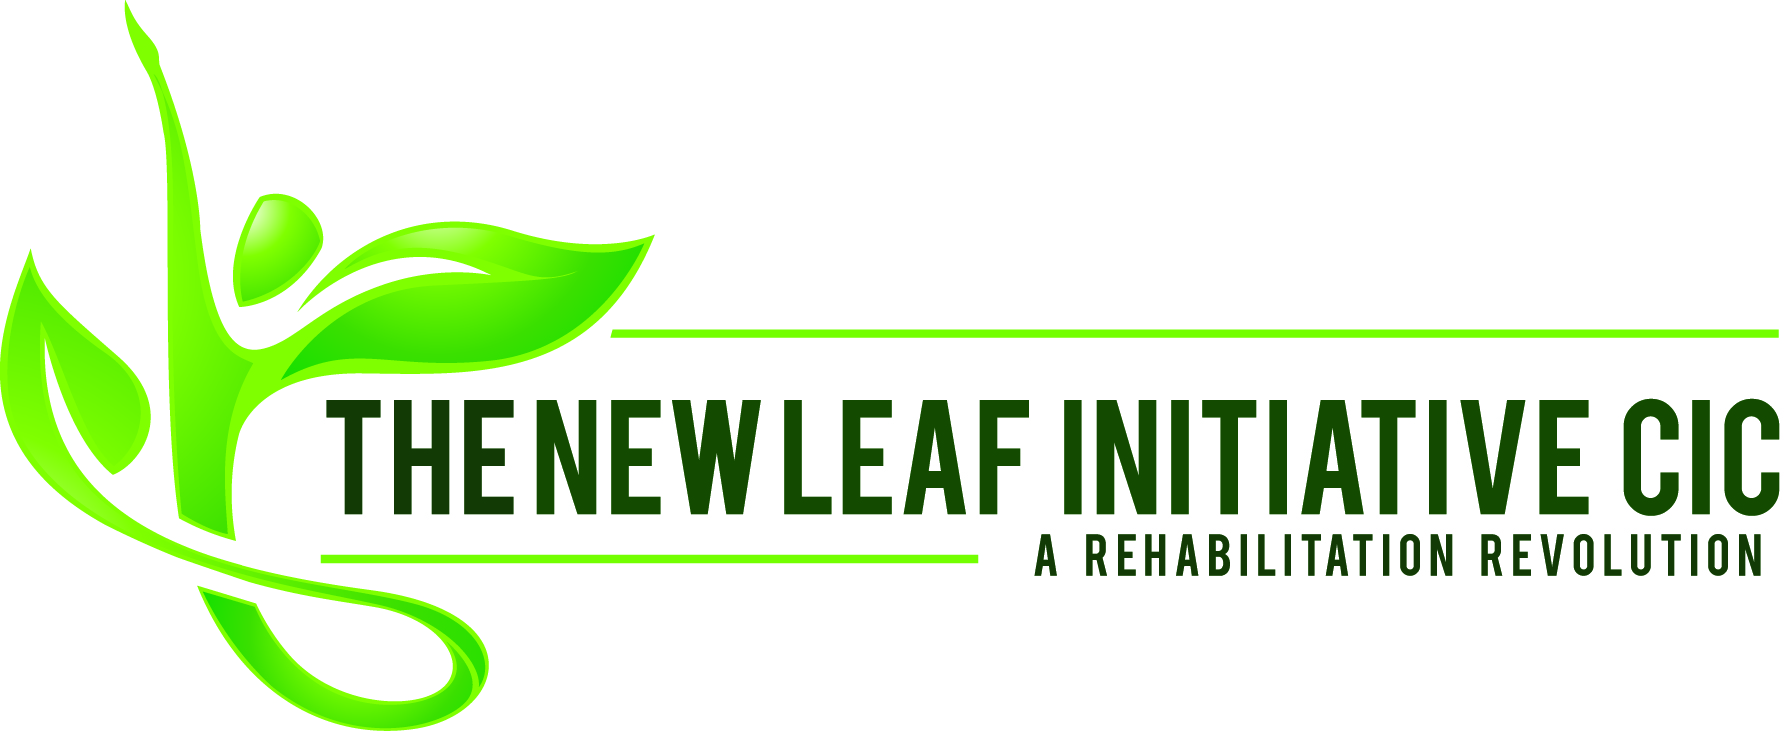 The New Leaf Initiative C.I.C